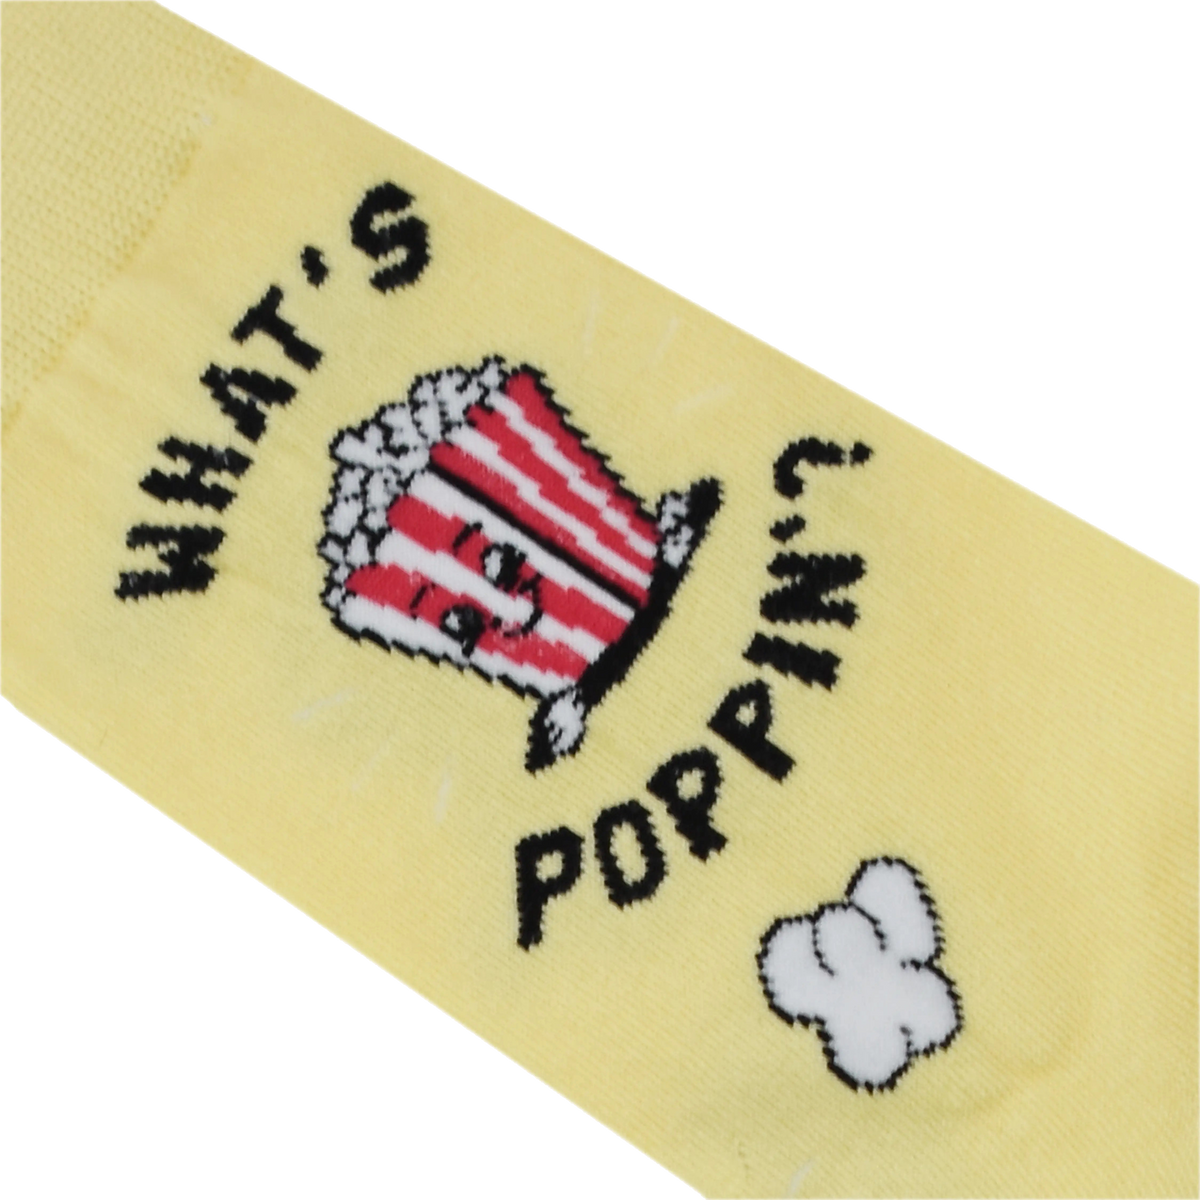 What&#39;s Poppin Socks - Womens